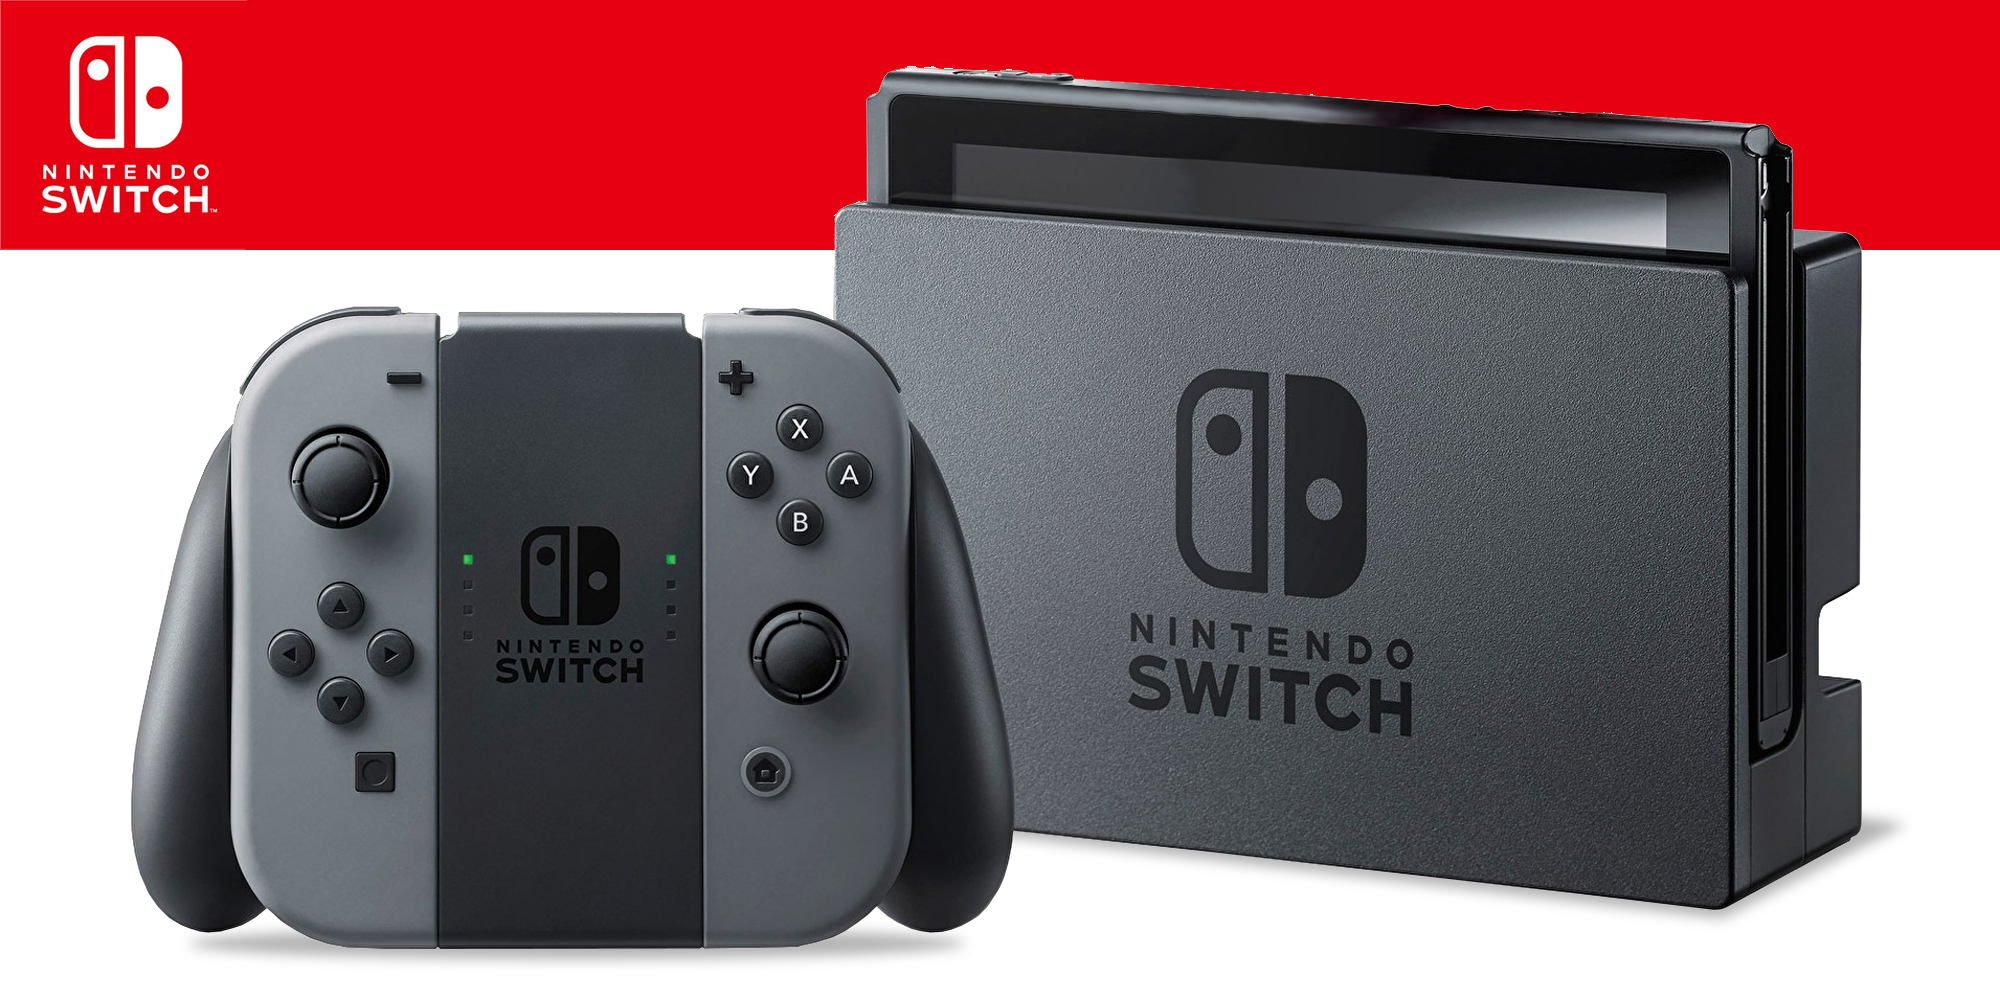  Plein d’infos pour la Nintendo Switch !